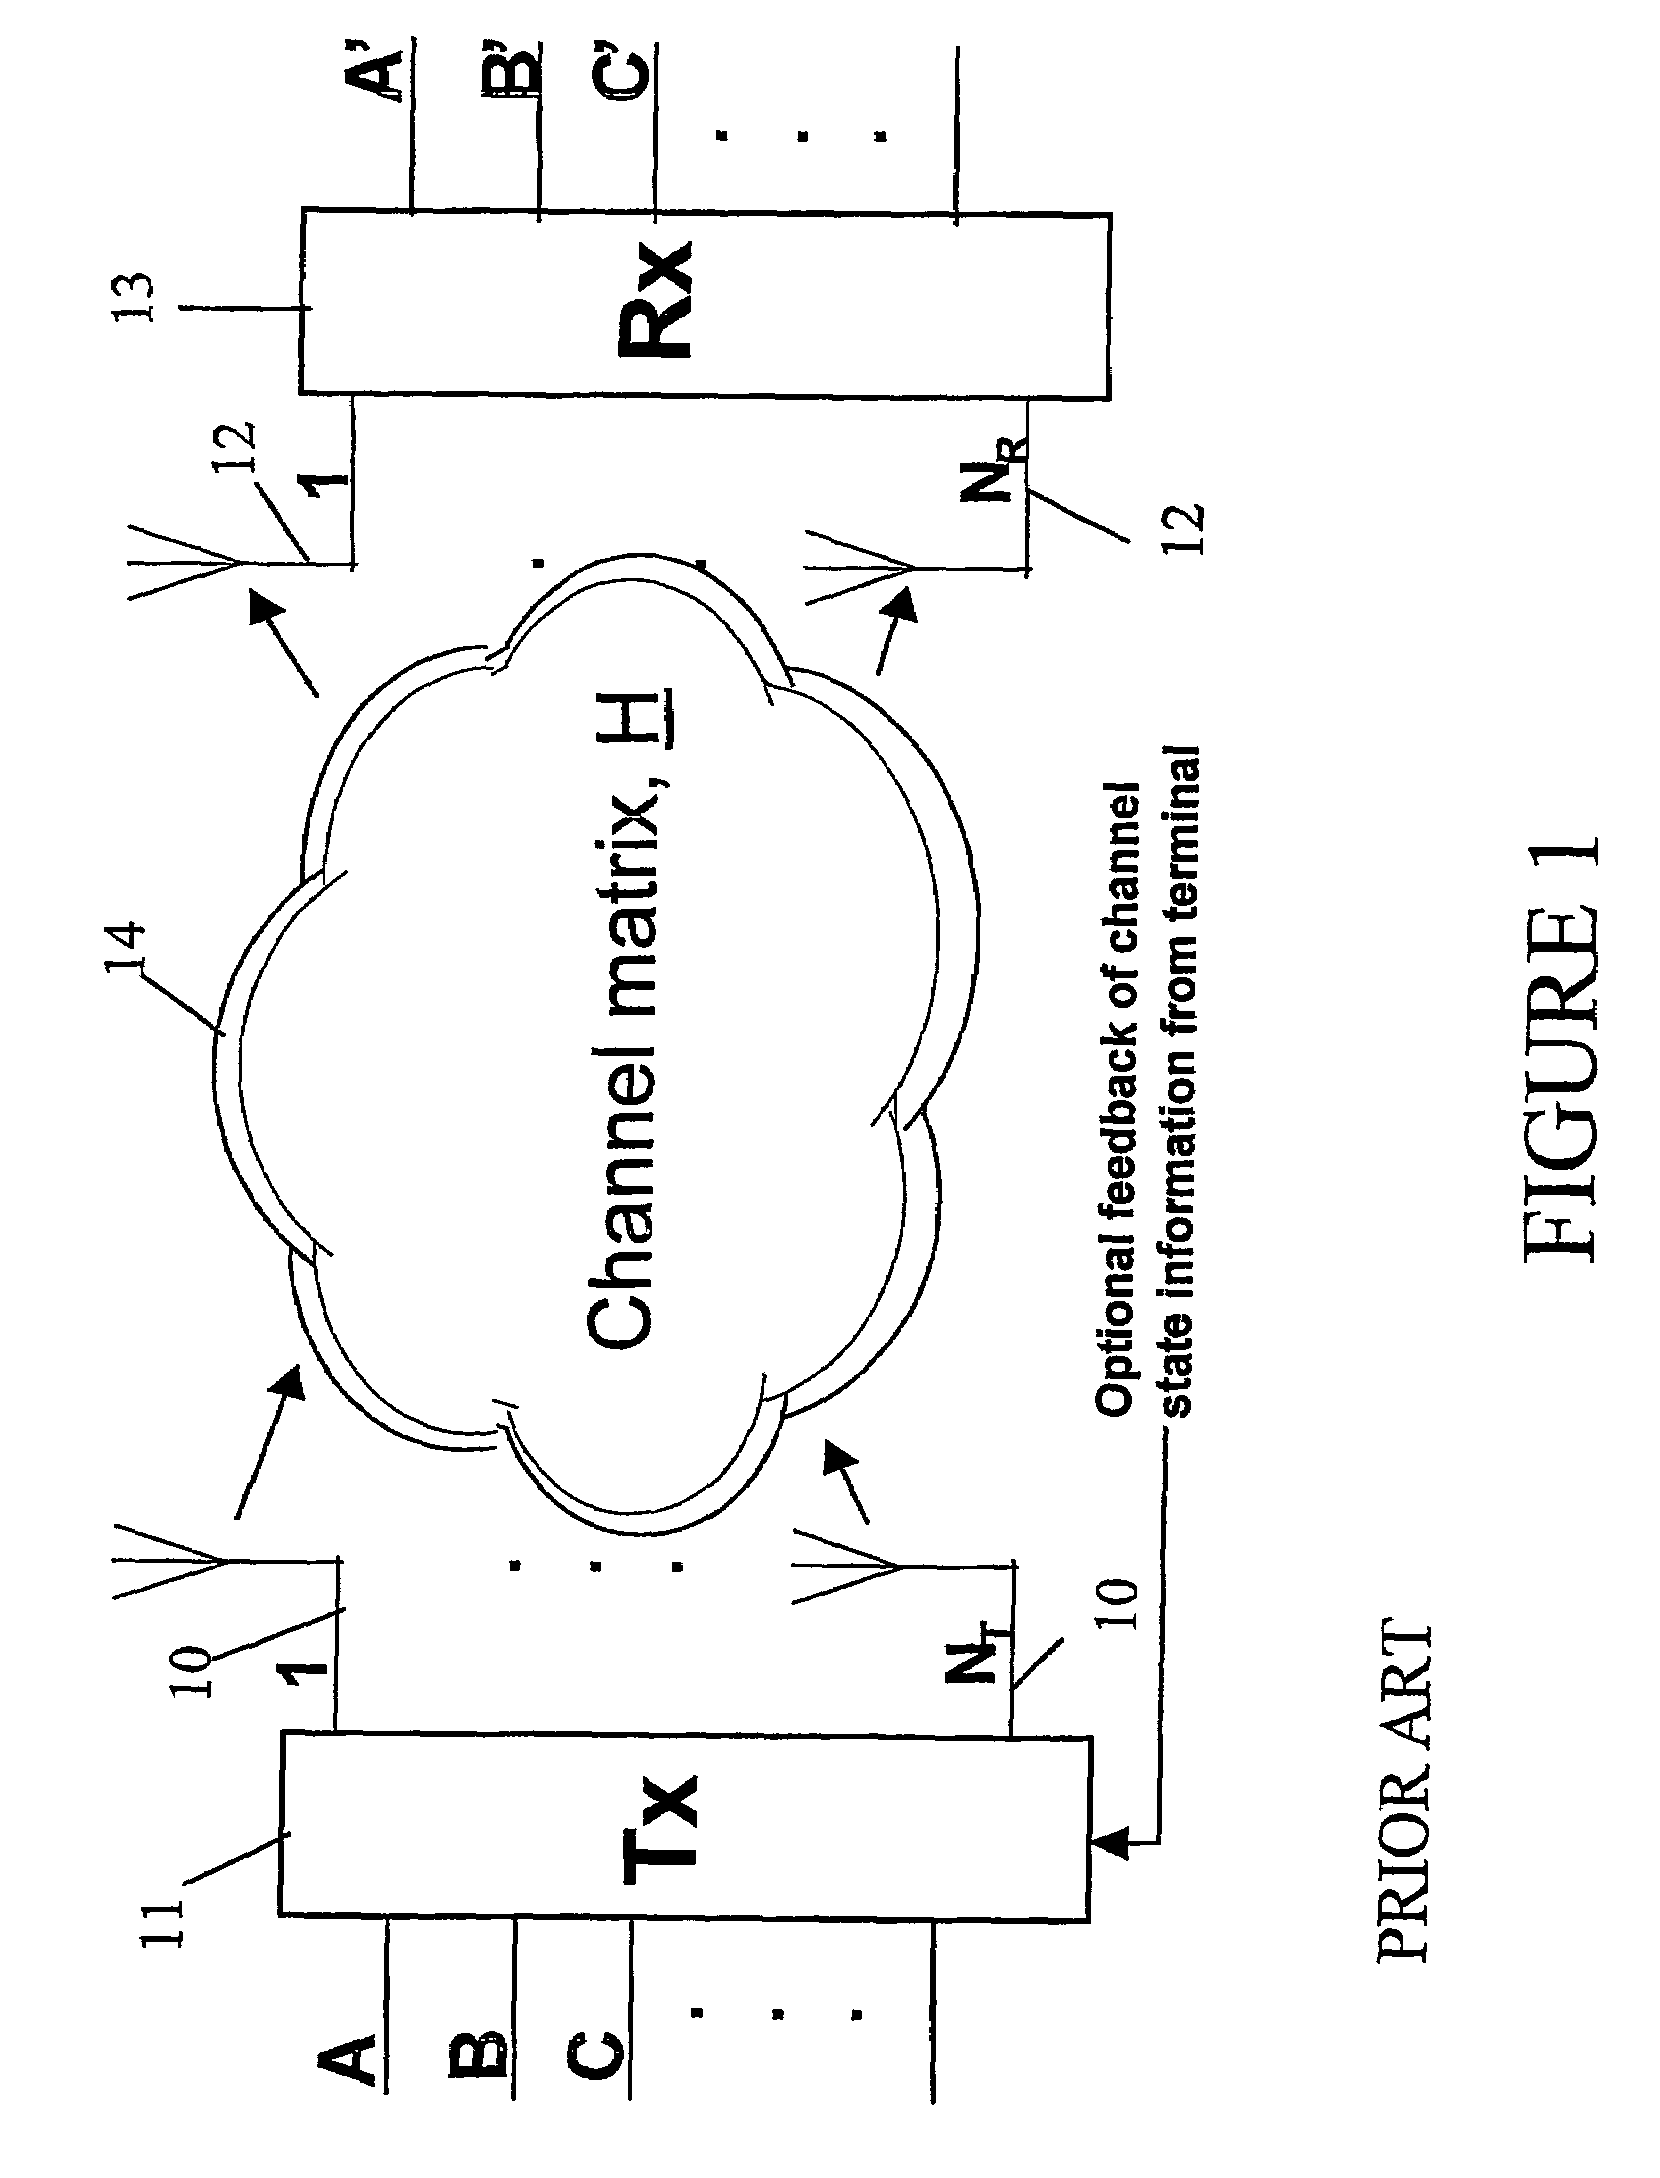 User terminal antenna arrangement for multiple-input multiple-output communications